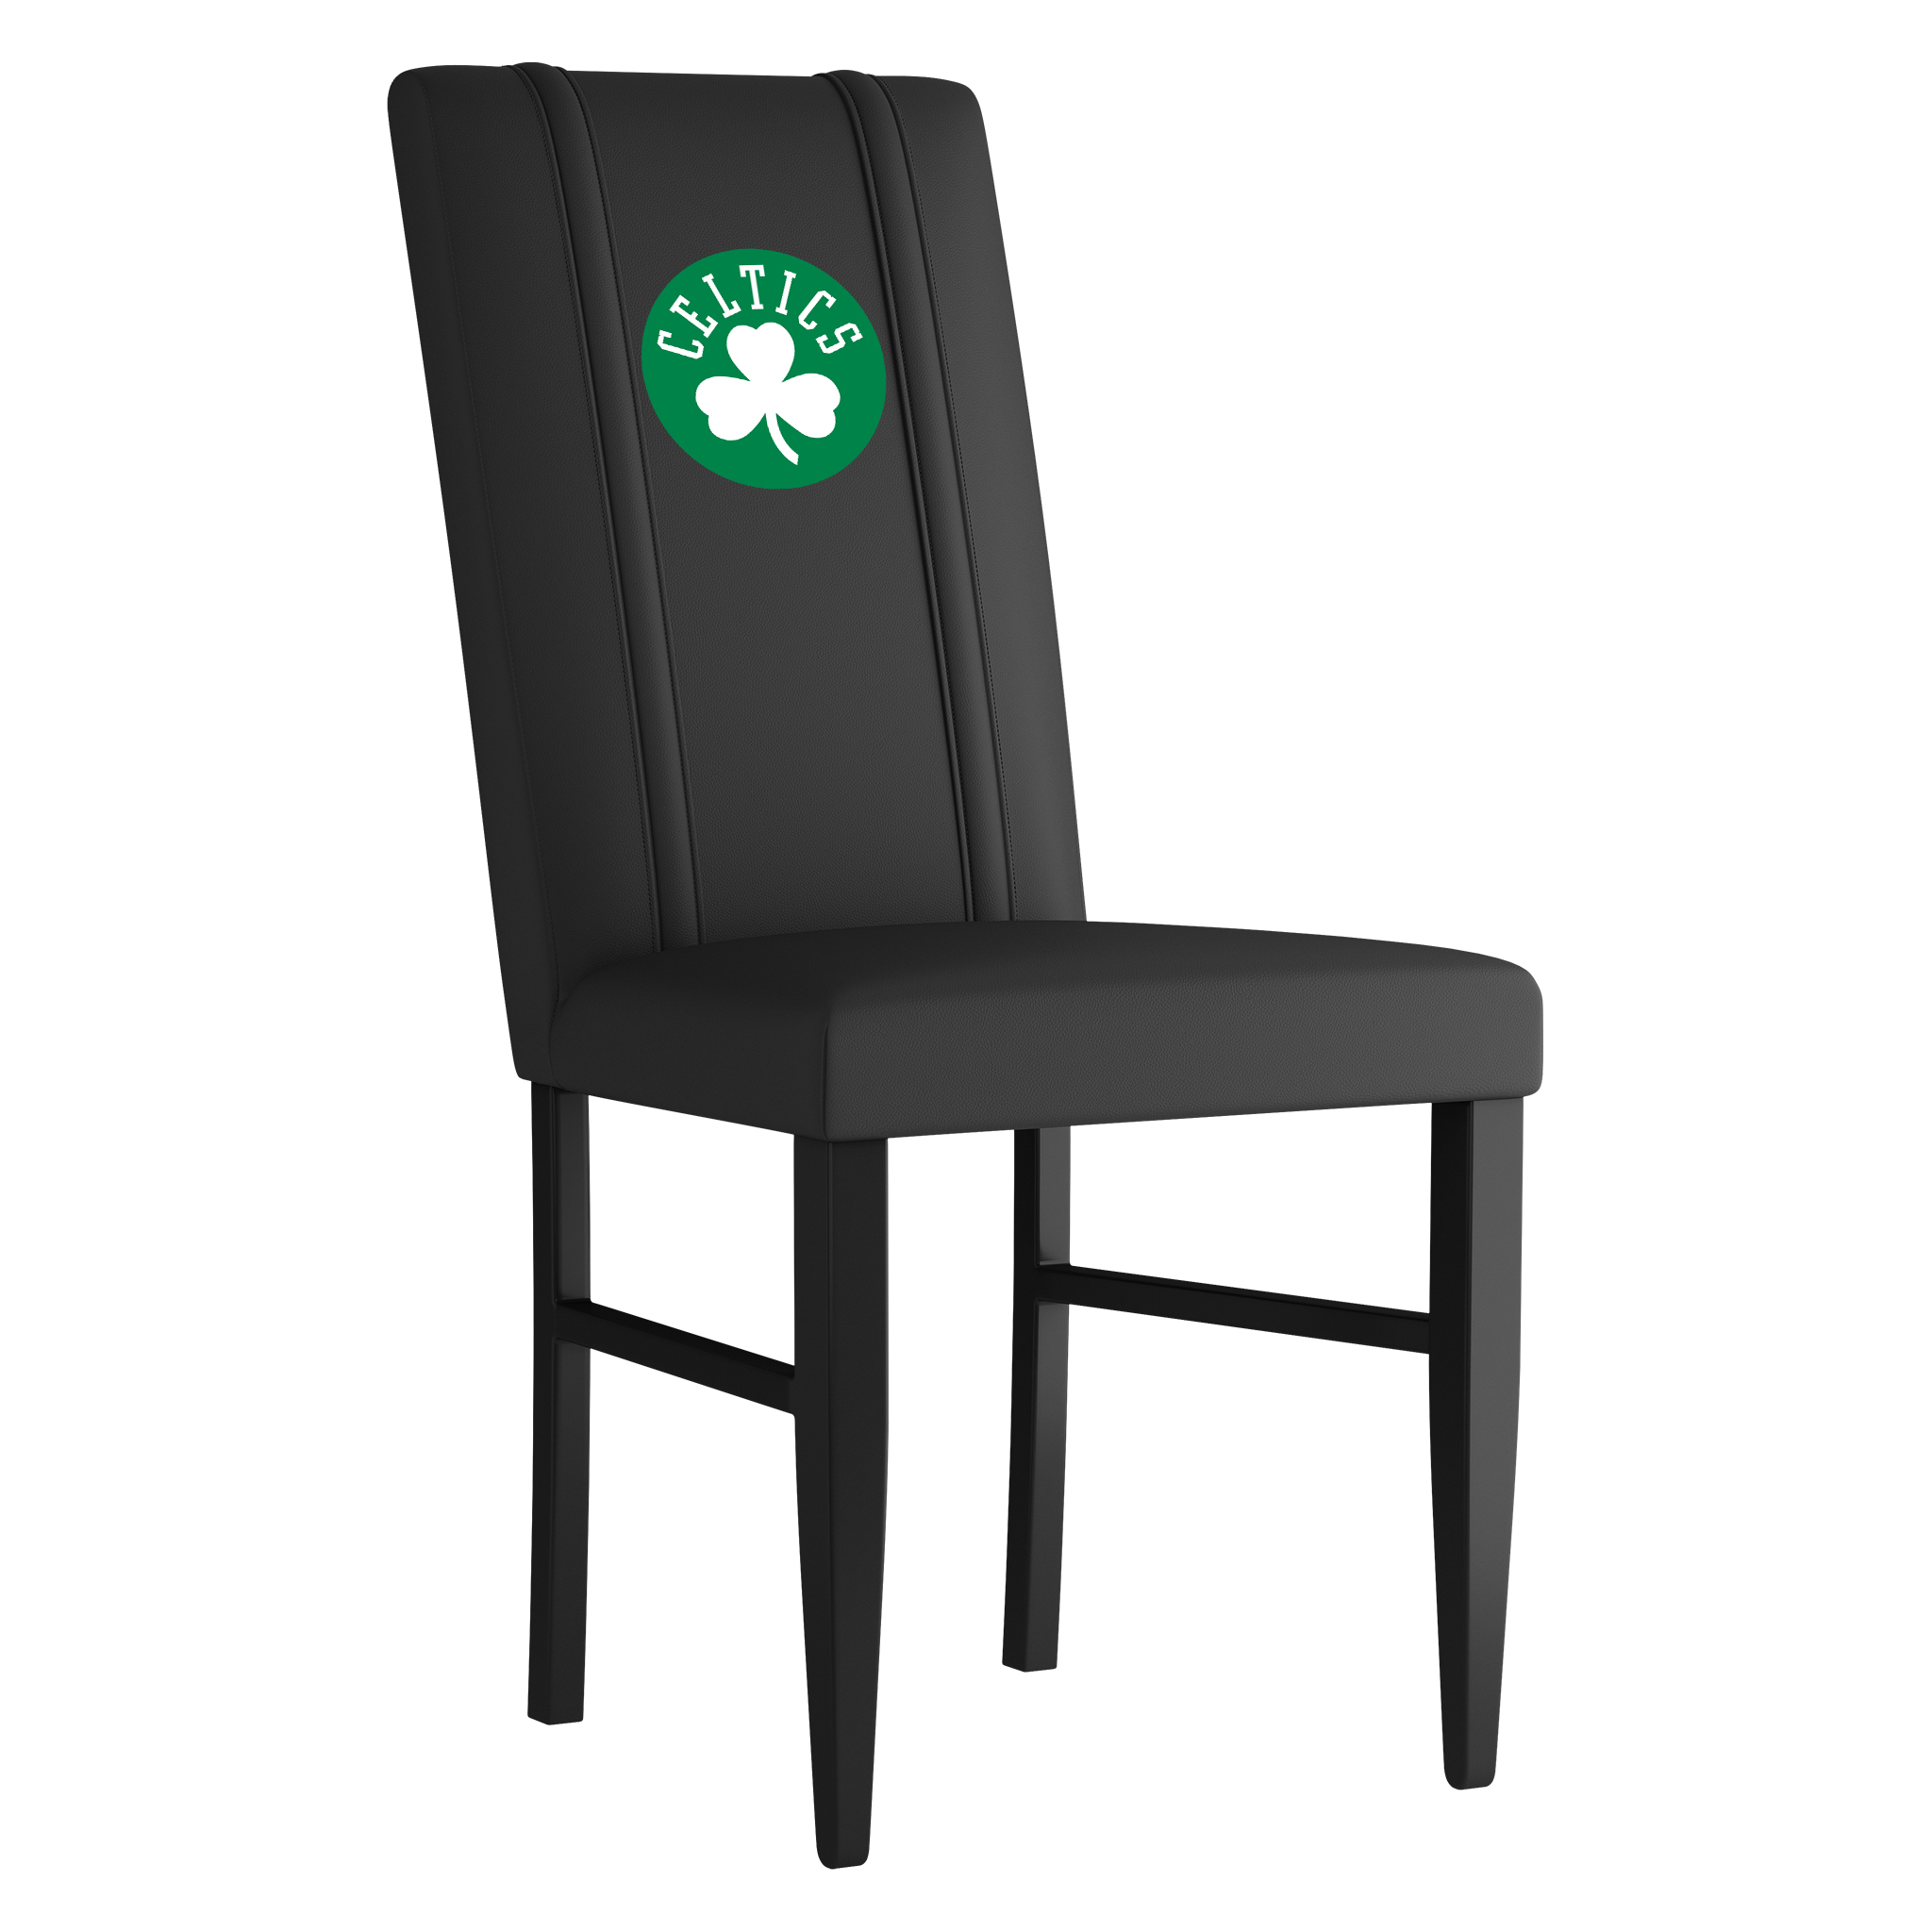 Boston Celtics Side Chair 2000 With Boston Celtics Secondary